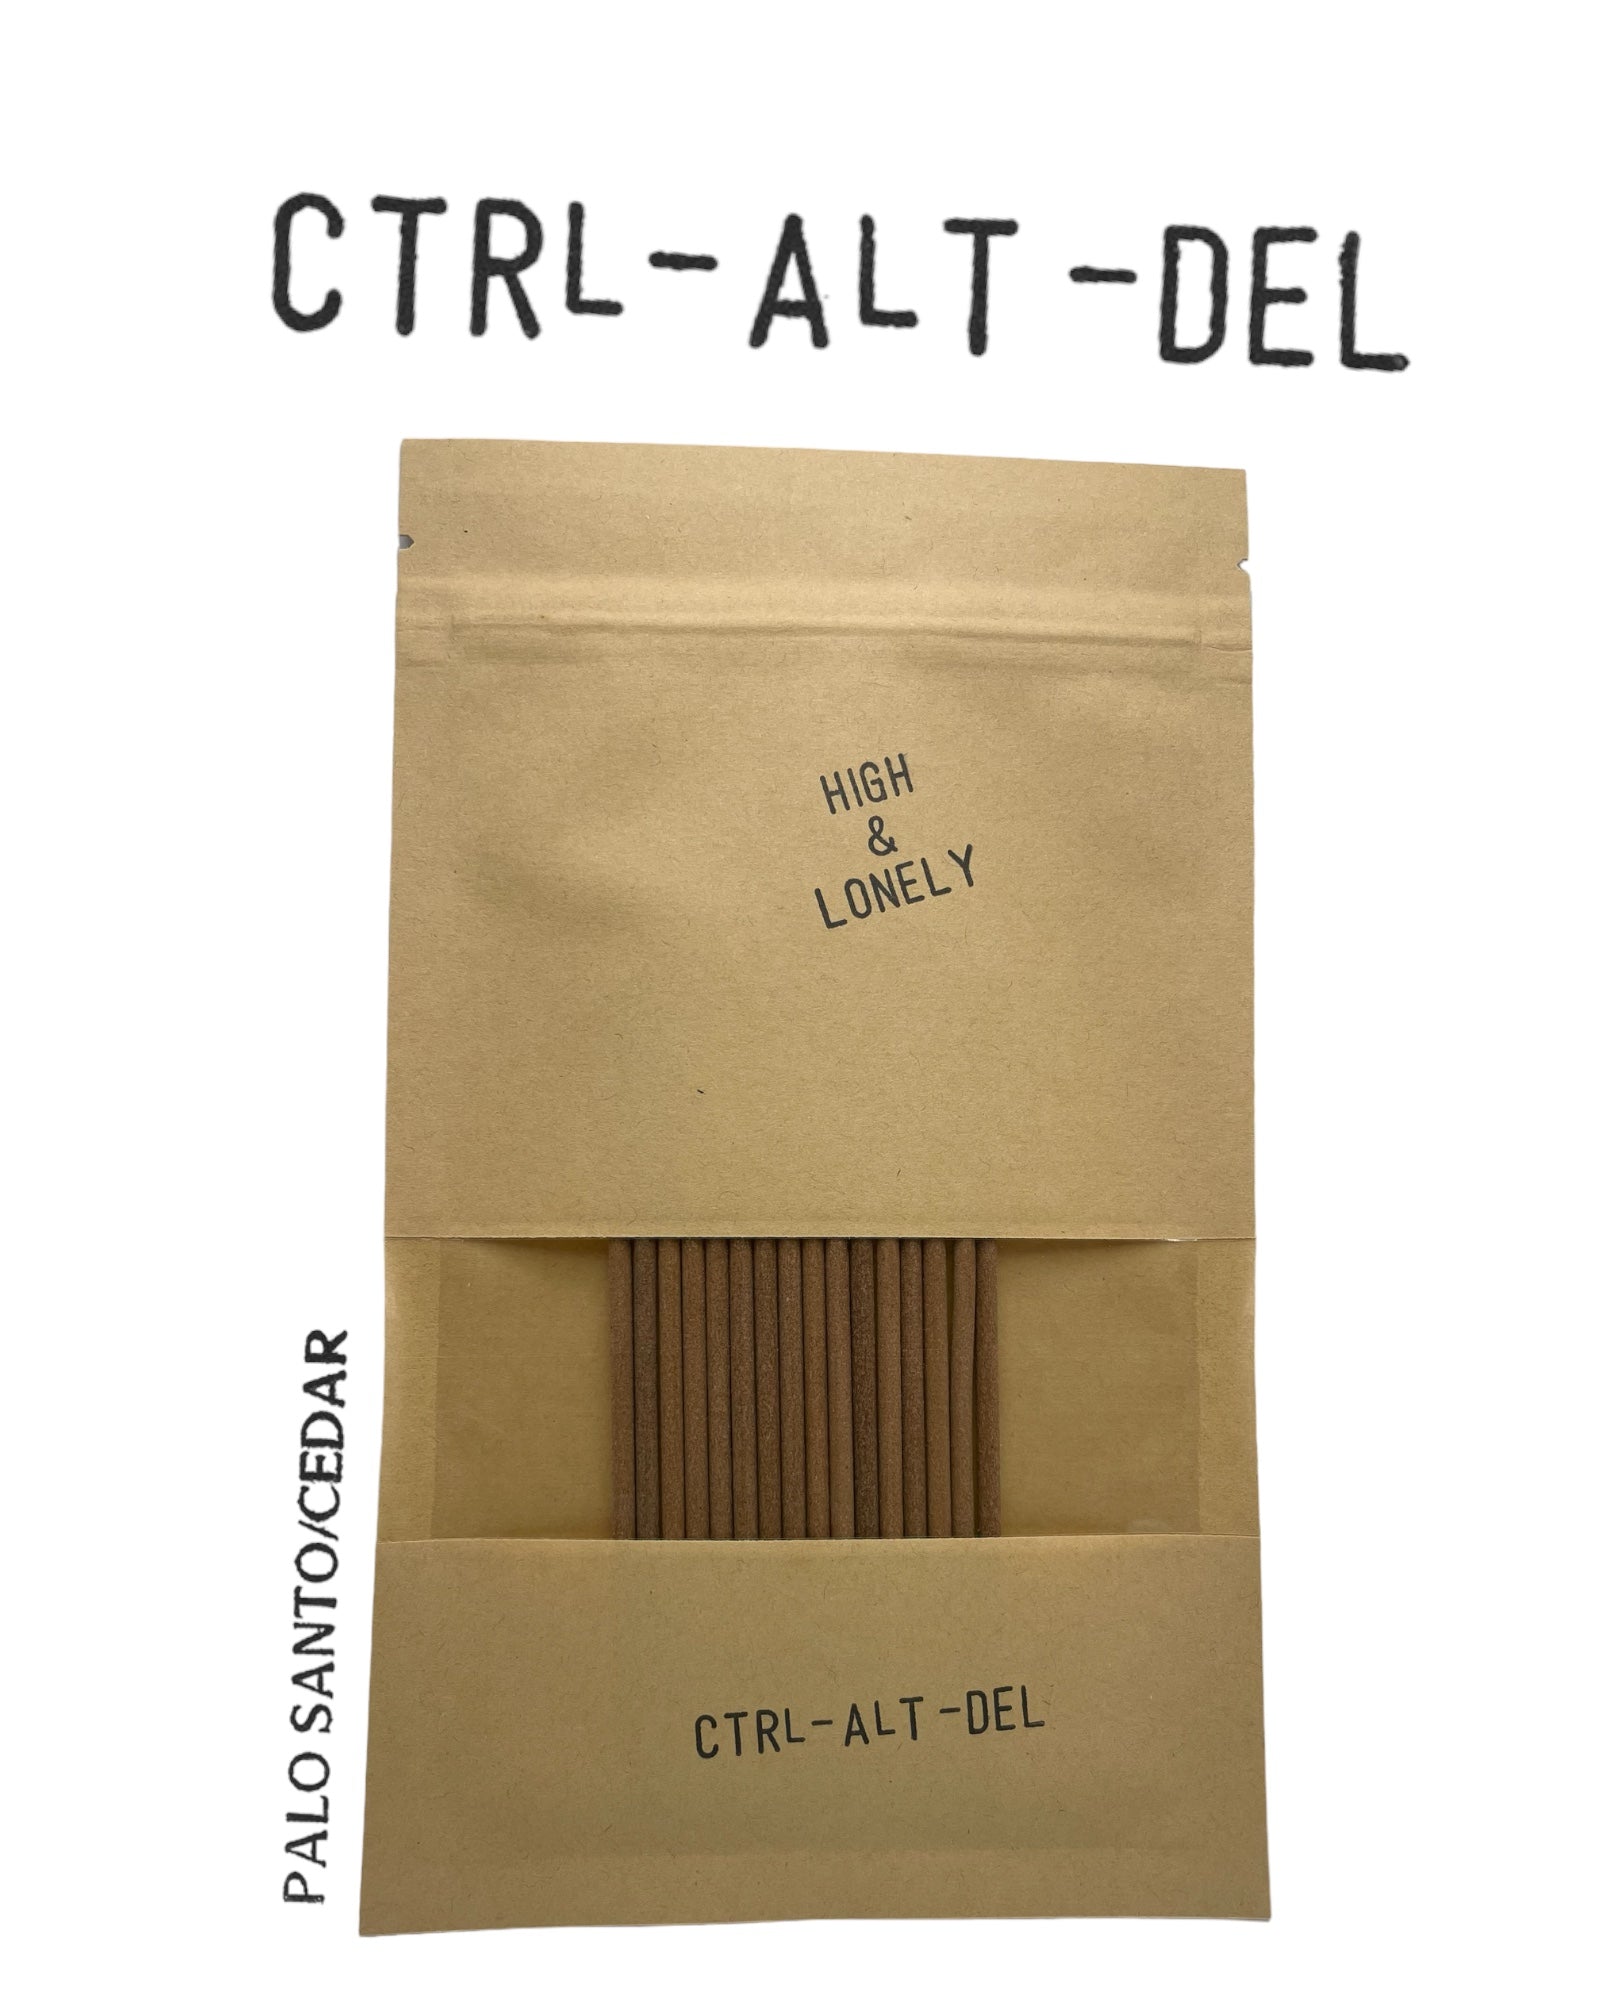 CTRL-ALT-DEL